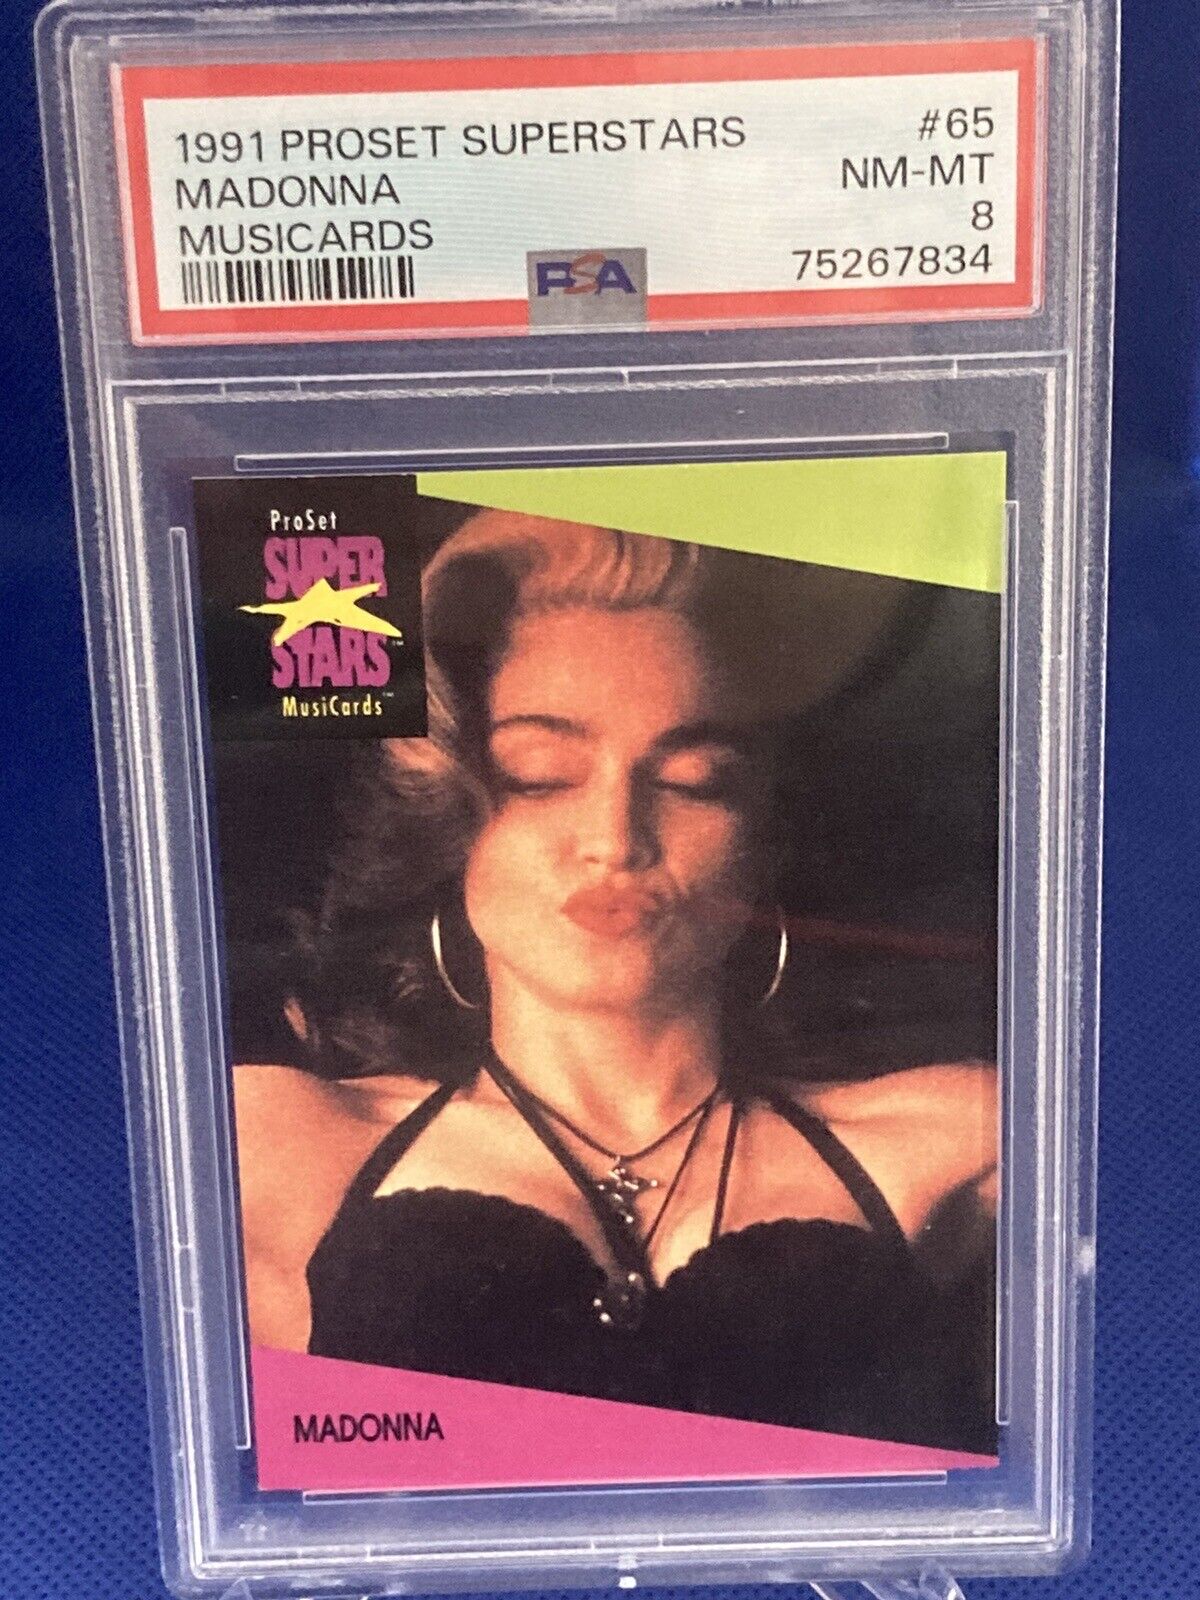 1991 Madonna Proset Superstars Musicards #65 PSA 8 Amazing Card 🔥🔥